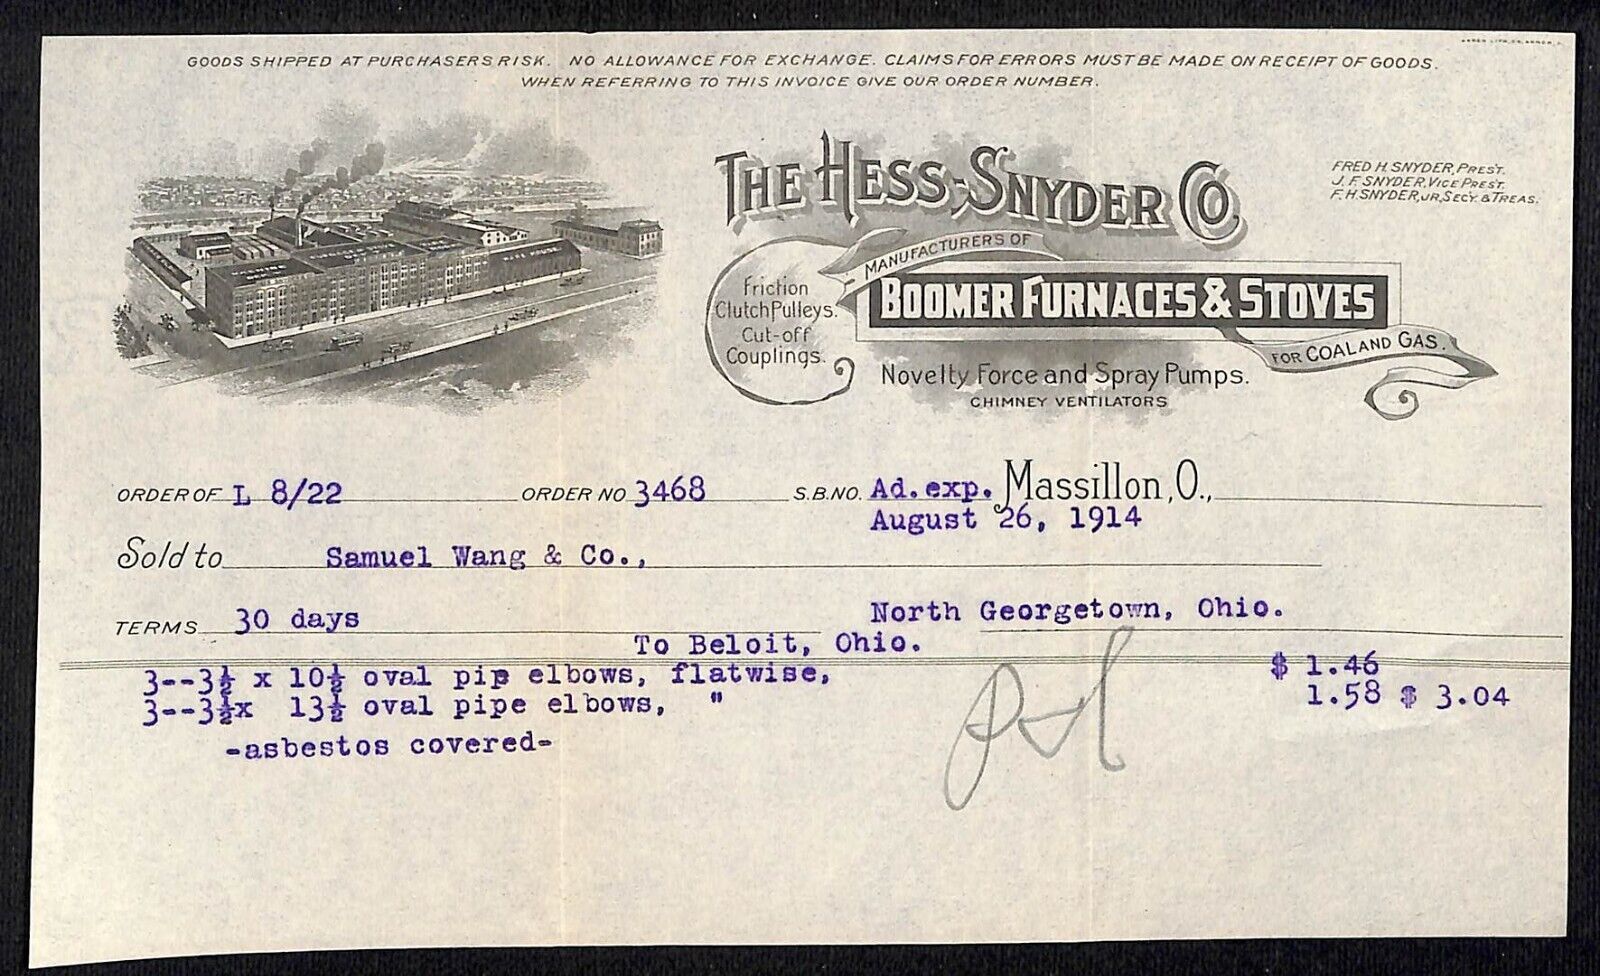 Hess-Snyder Co Furnaces Stoves Massillon Billhead 1914 Samuel Wang* N Georgetown